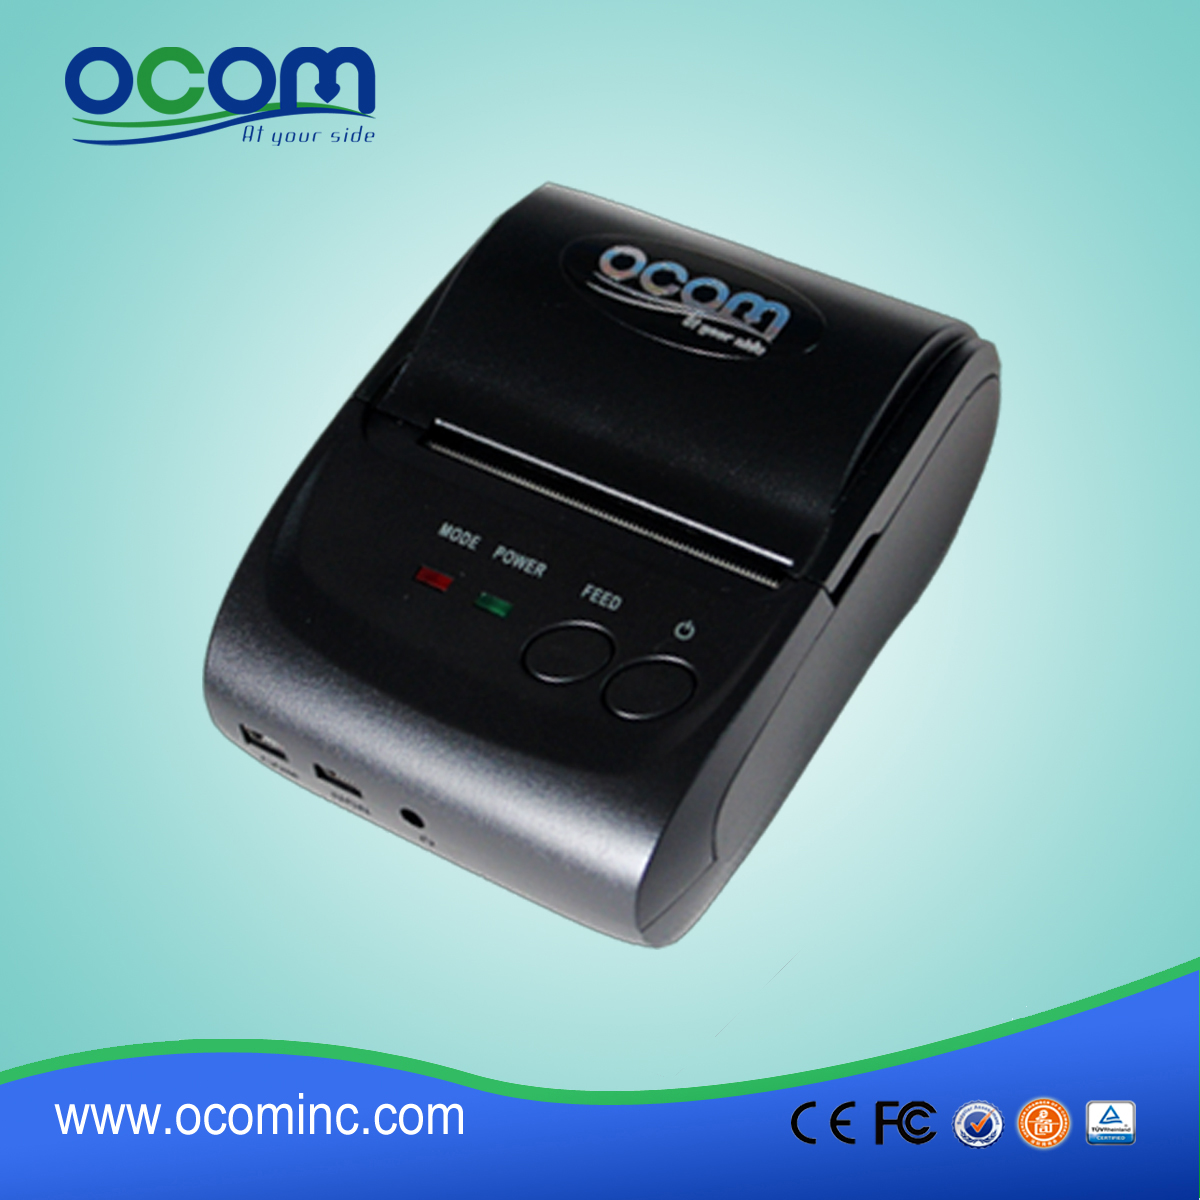 OCPP-M05 58毫米便携式热敏收据打印机